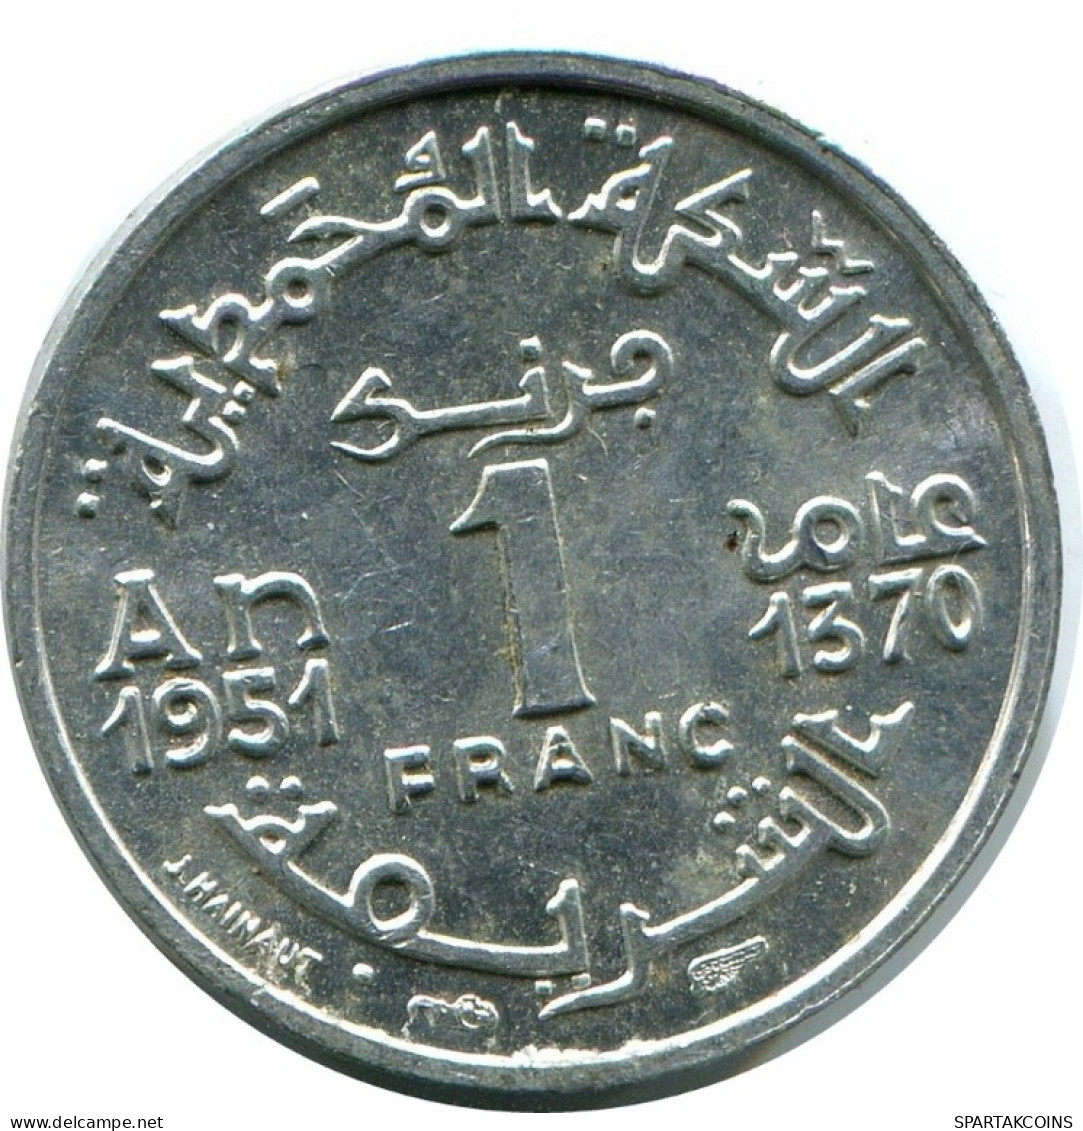 1 FRANCS 1951 MOROCCO Mohammed V Coin #AH920.U.A - Maroc